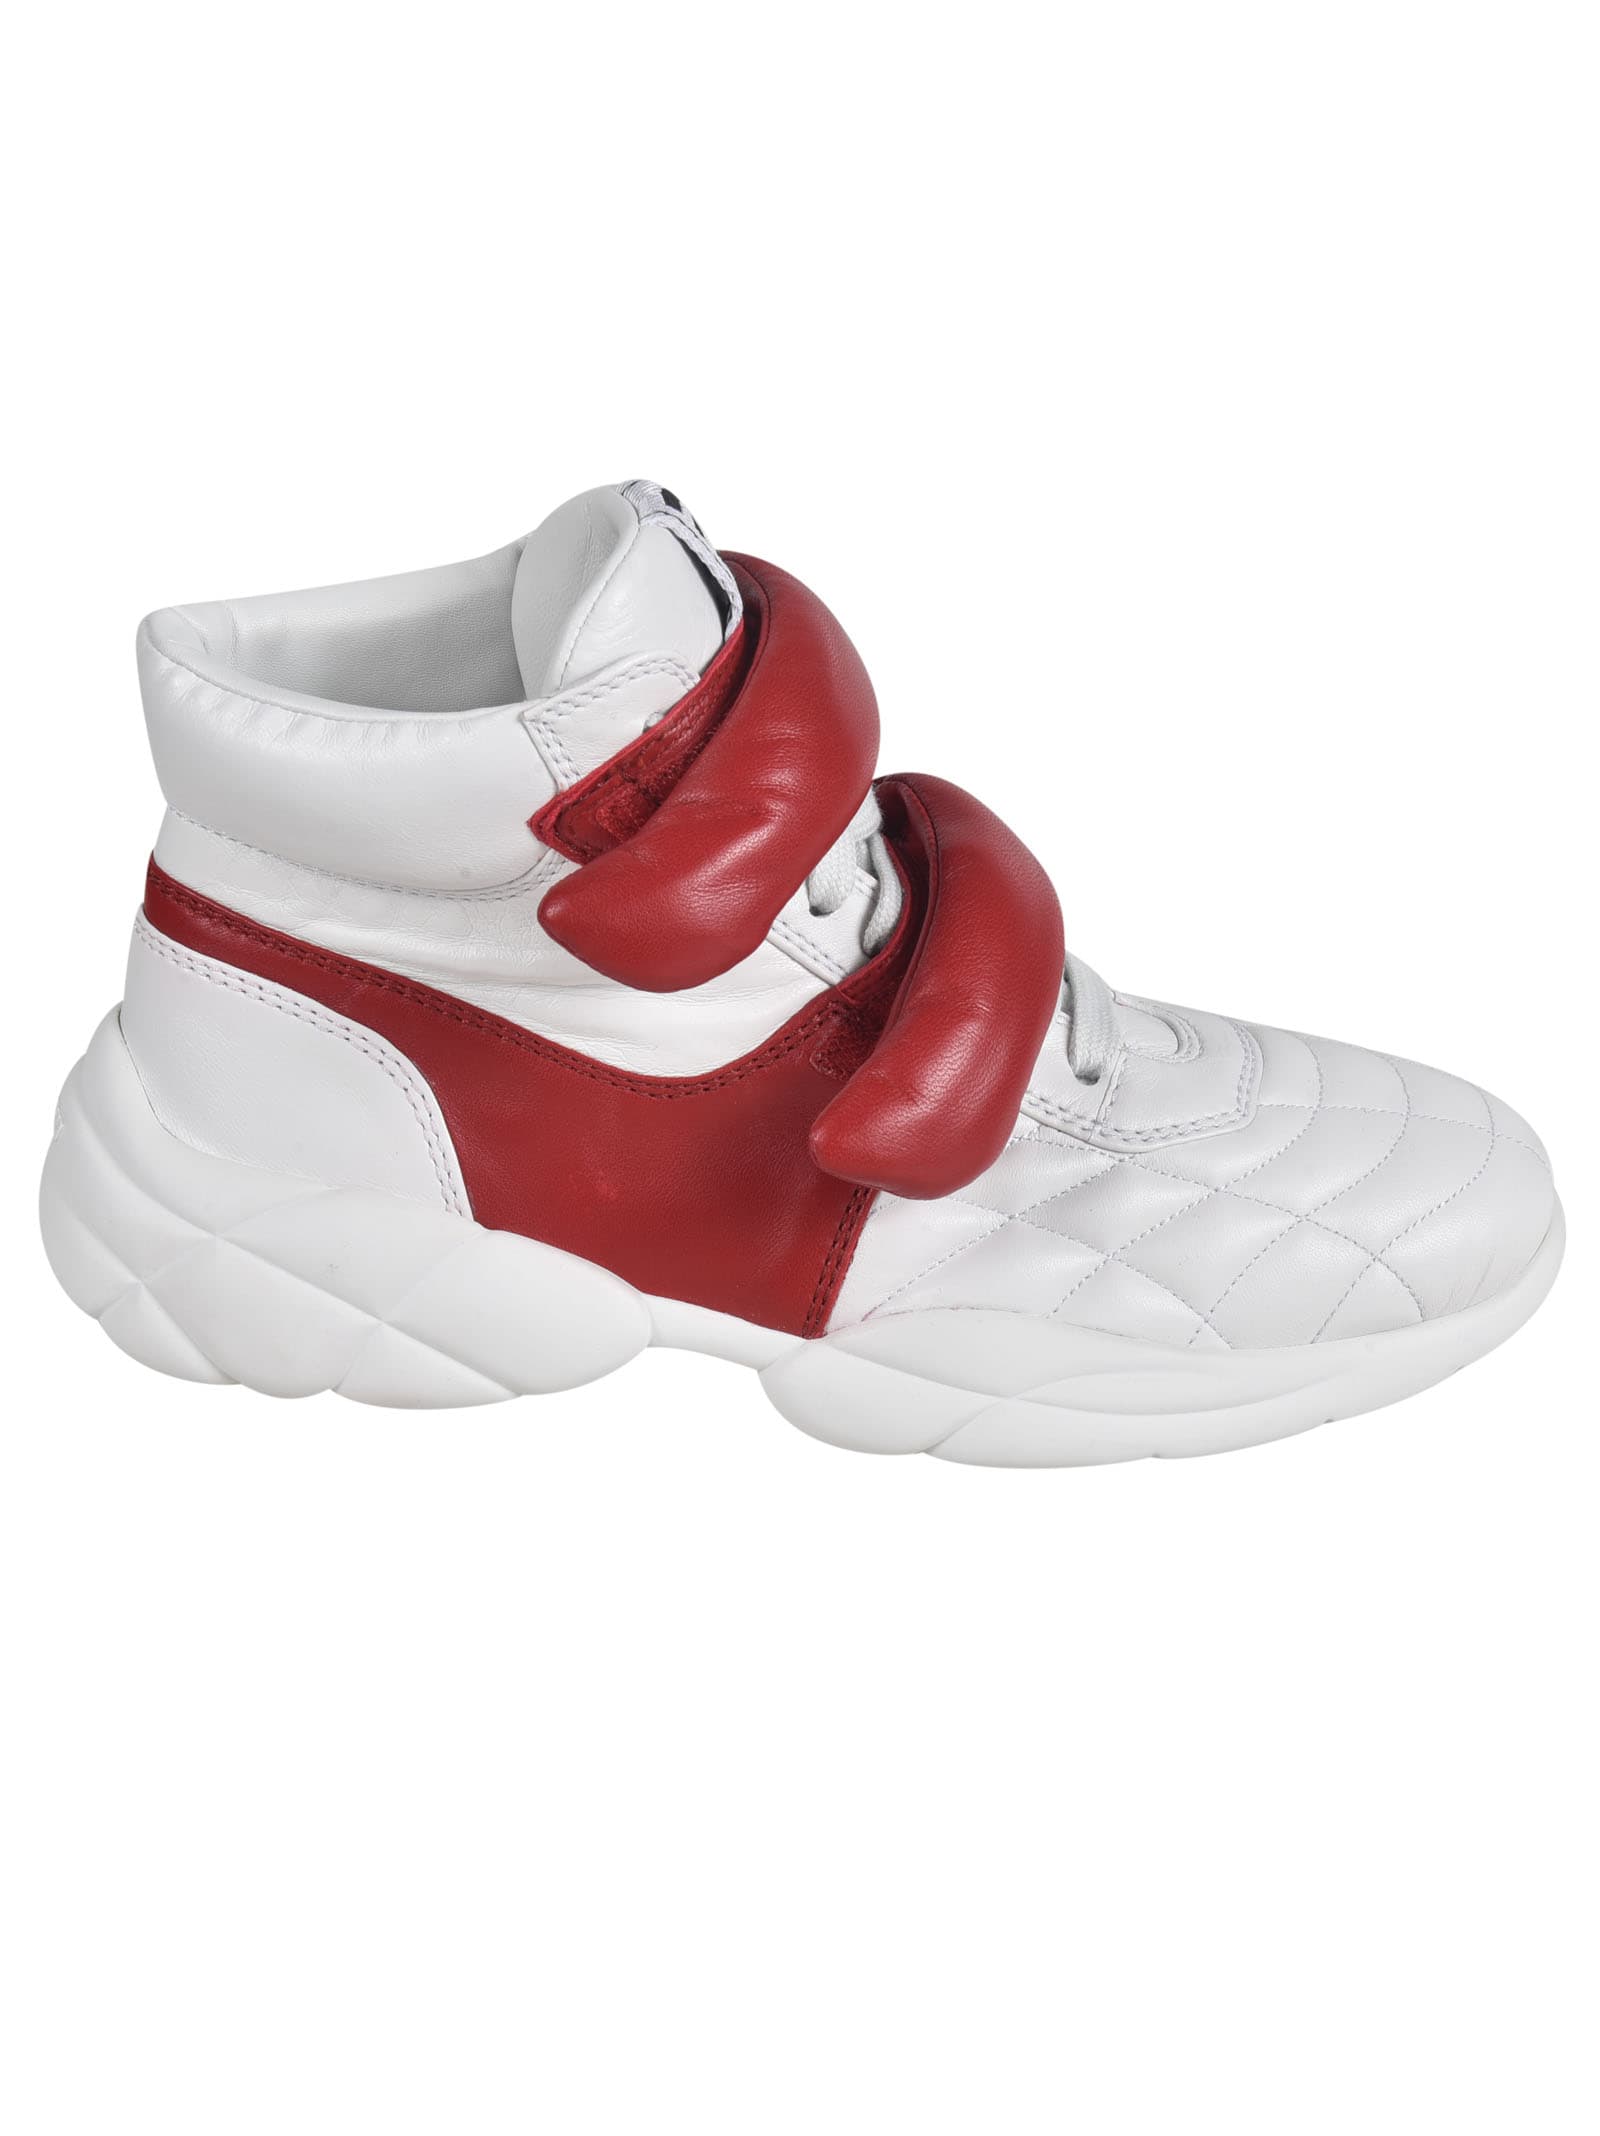 Buy Miu Miu Double-strap Padded Sneakers online, shop Miu Miu shoes with free shipping